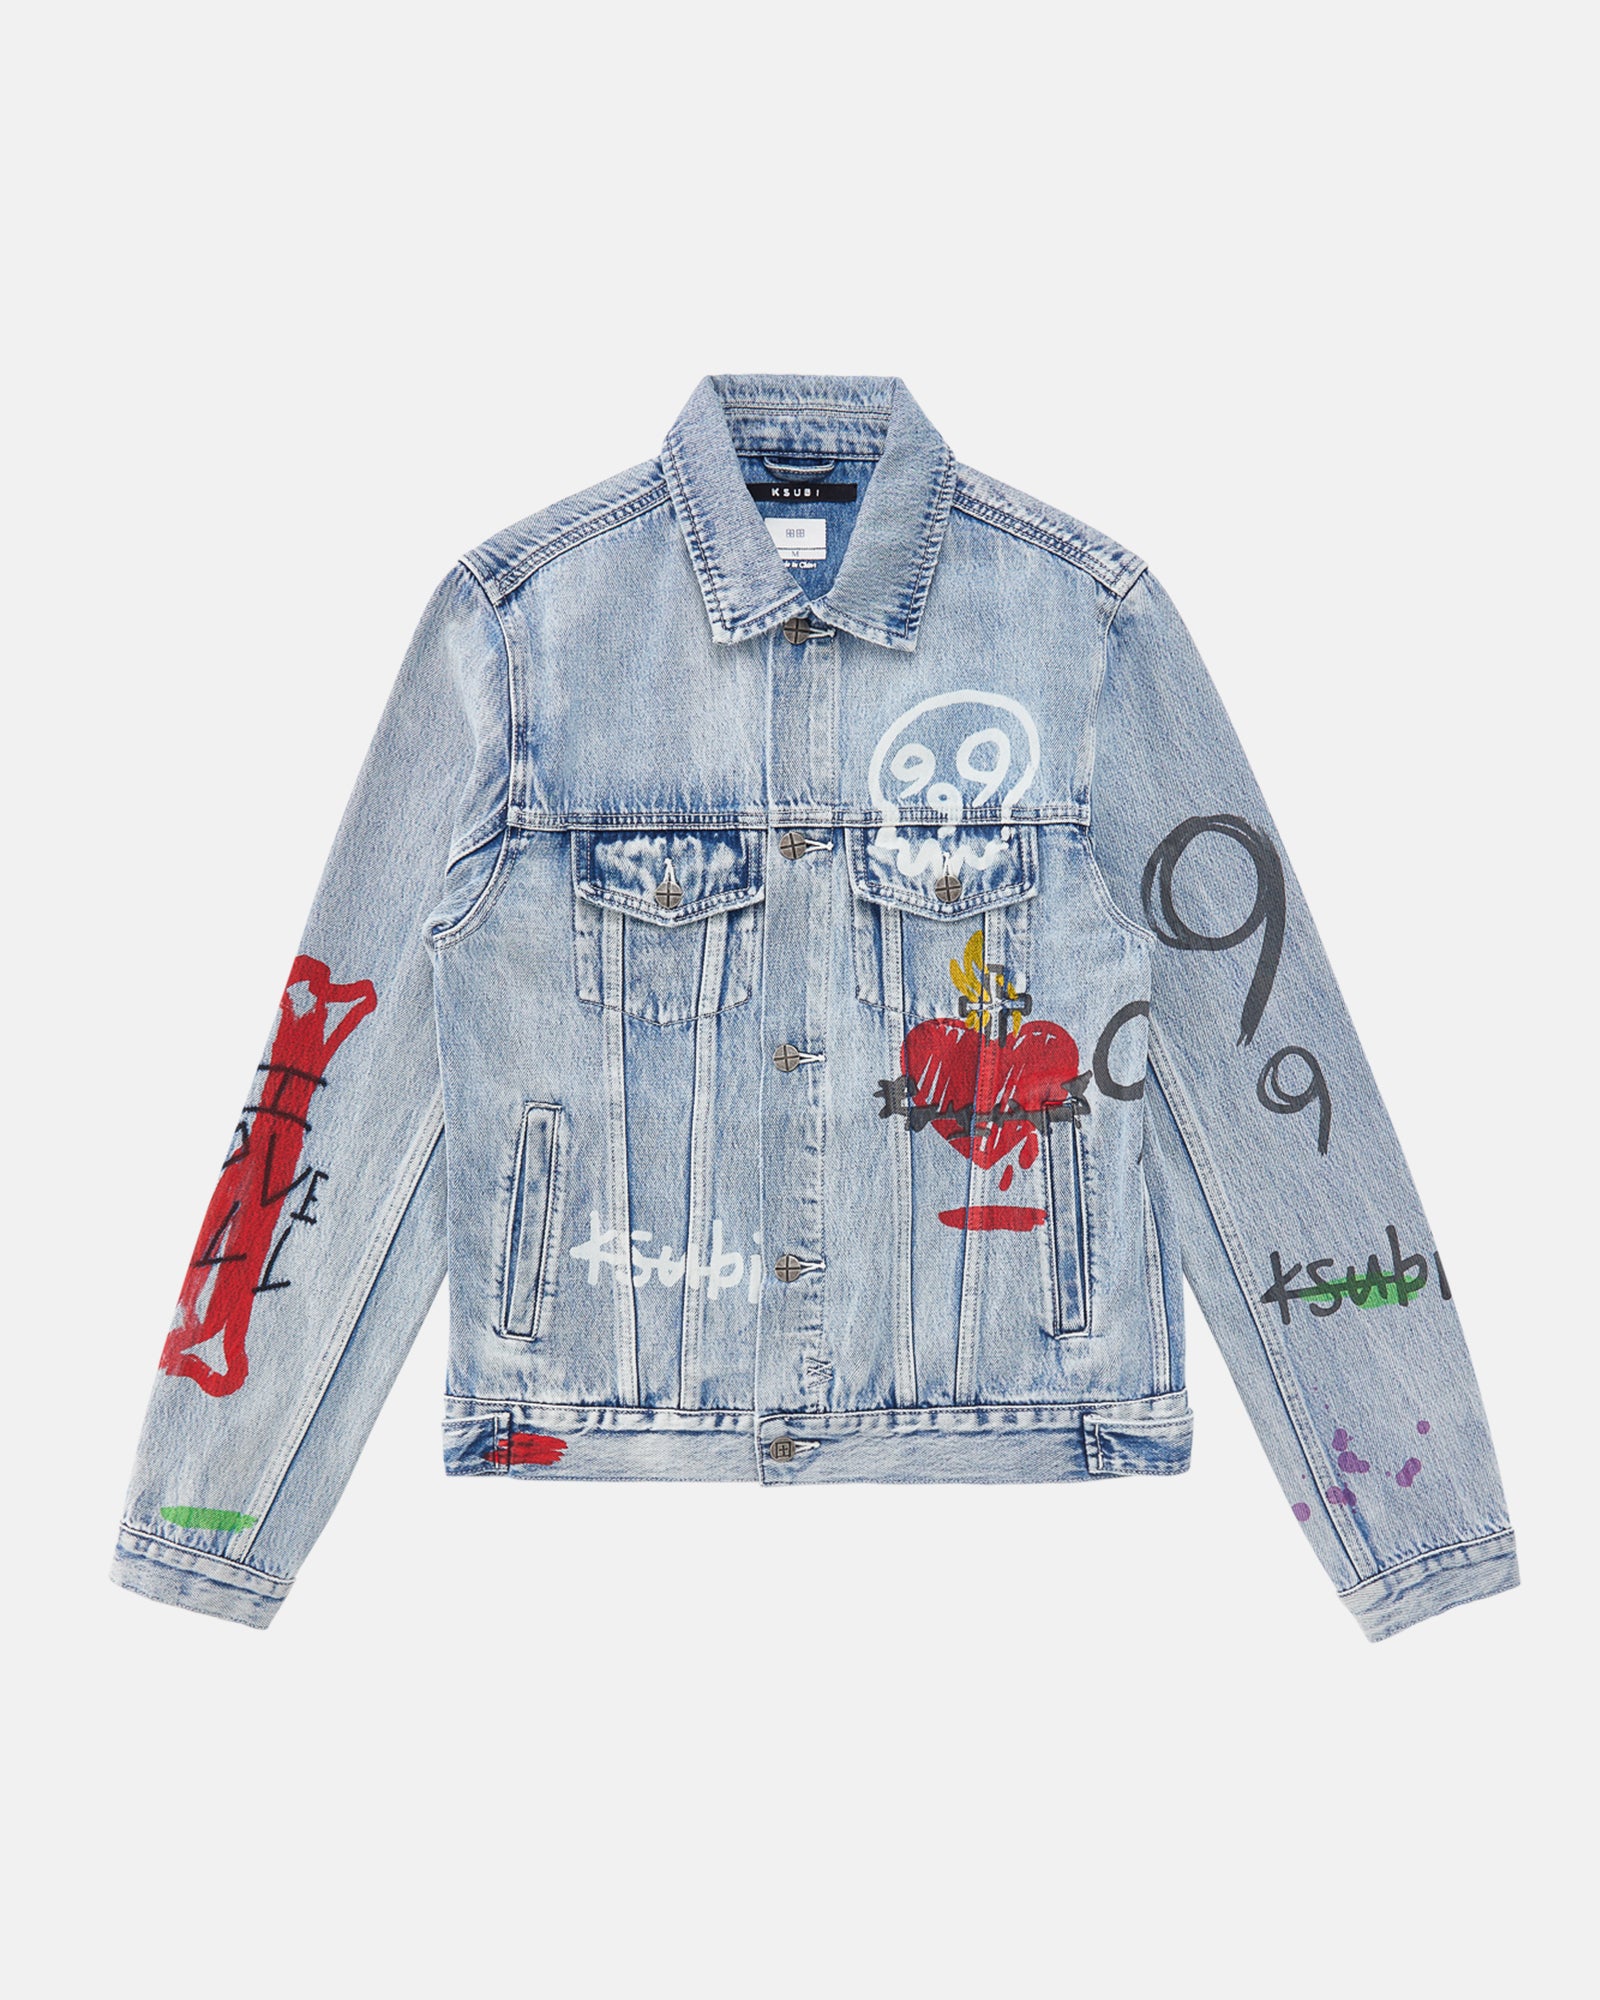 Shop Men's Jackets | Leather Jackets, Coats & More | Ksubi | Ksubi ++